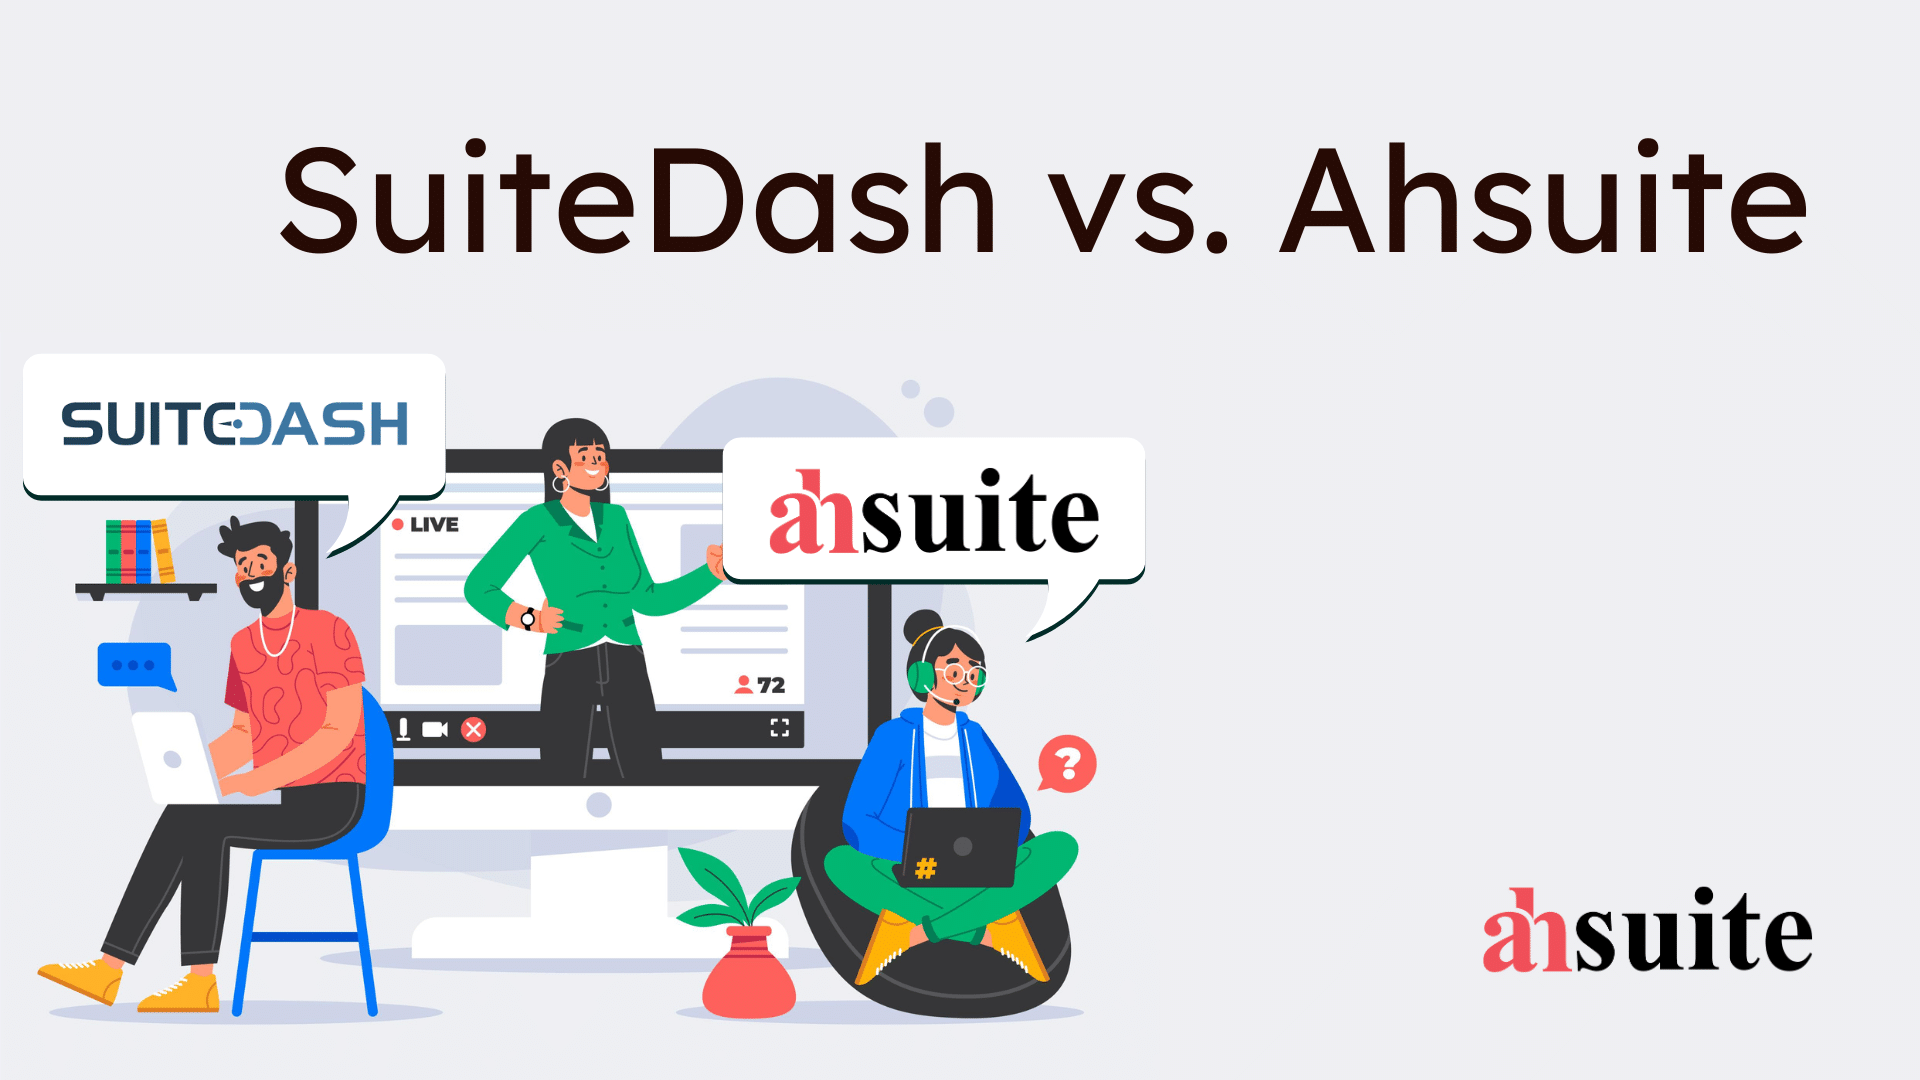 SuiteDash vs. Ahsuite